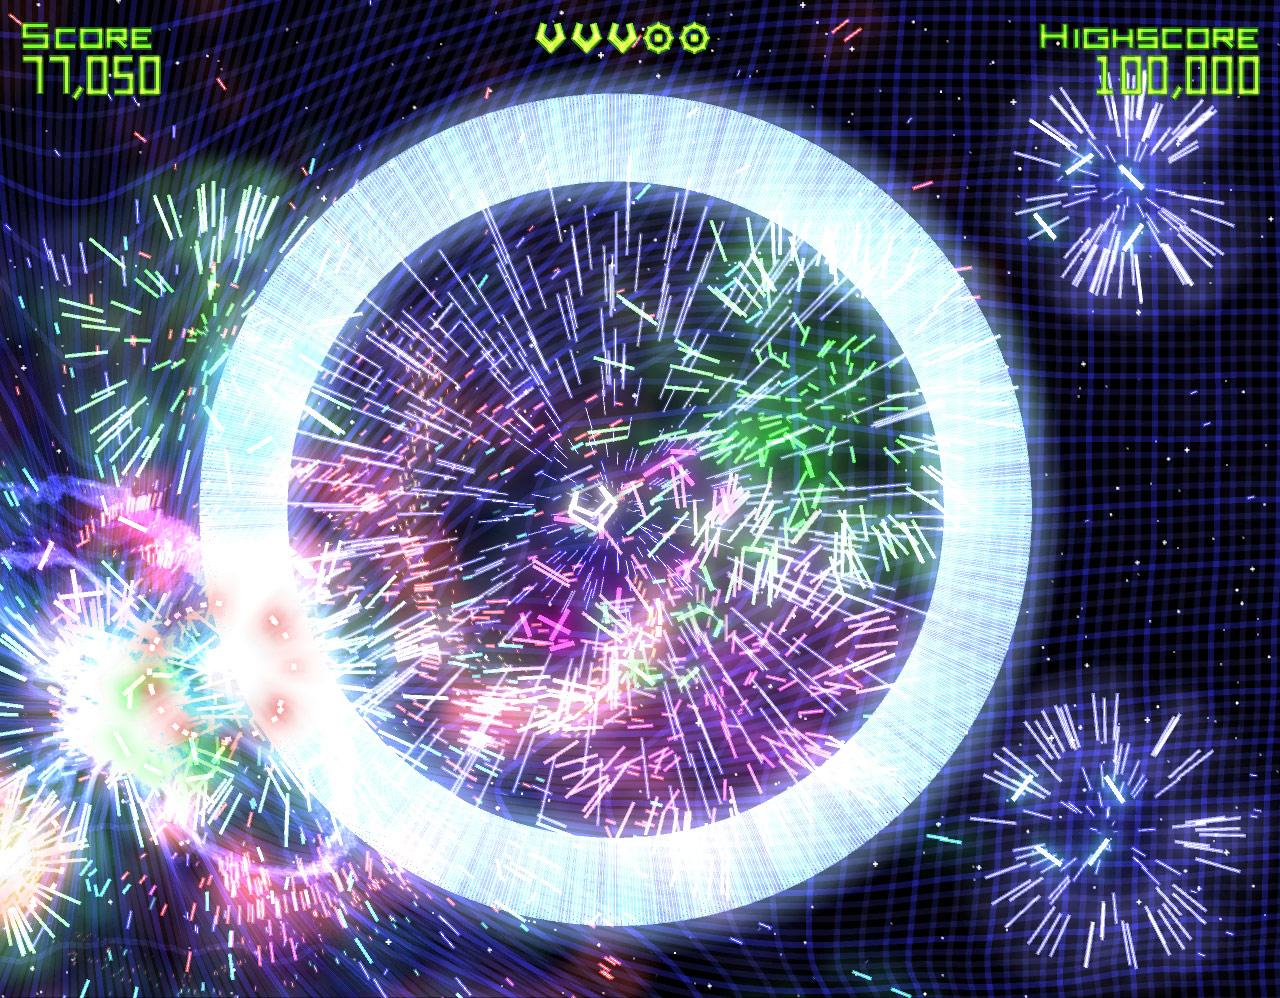 Geometry Wars: Retro Evolved screenshot